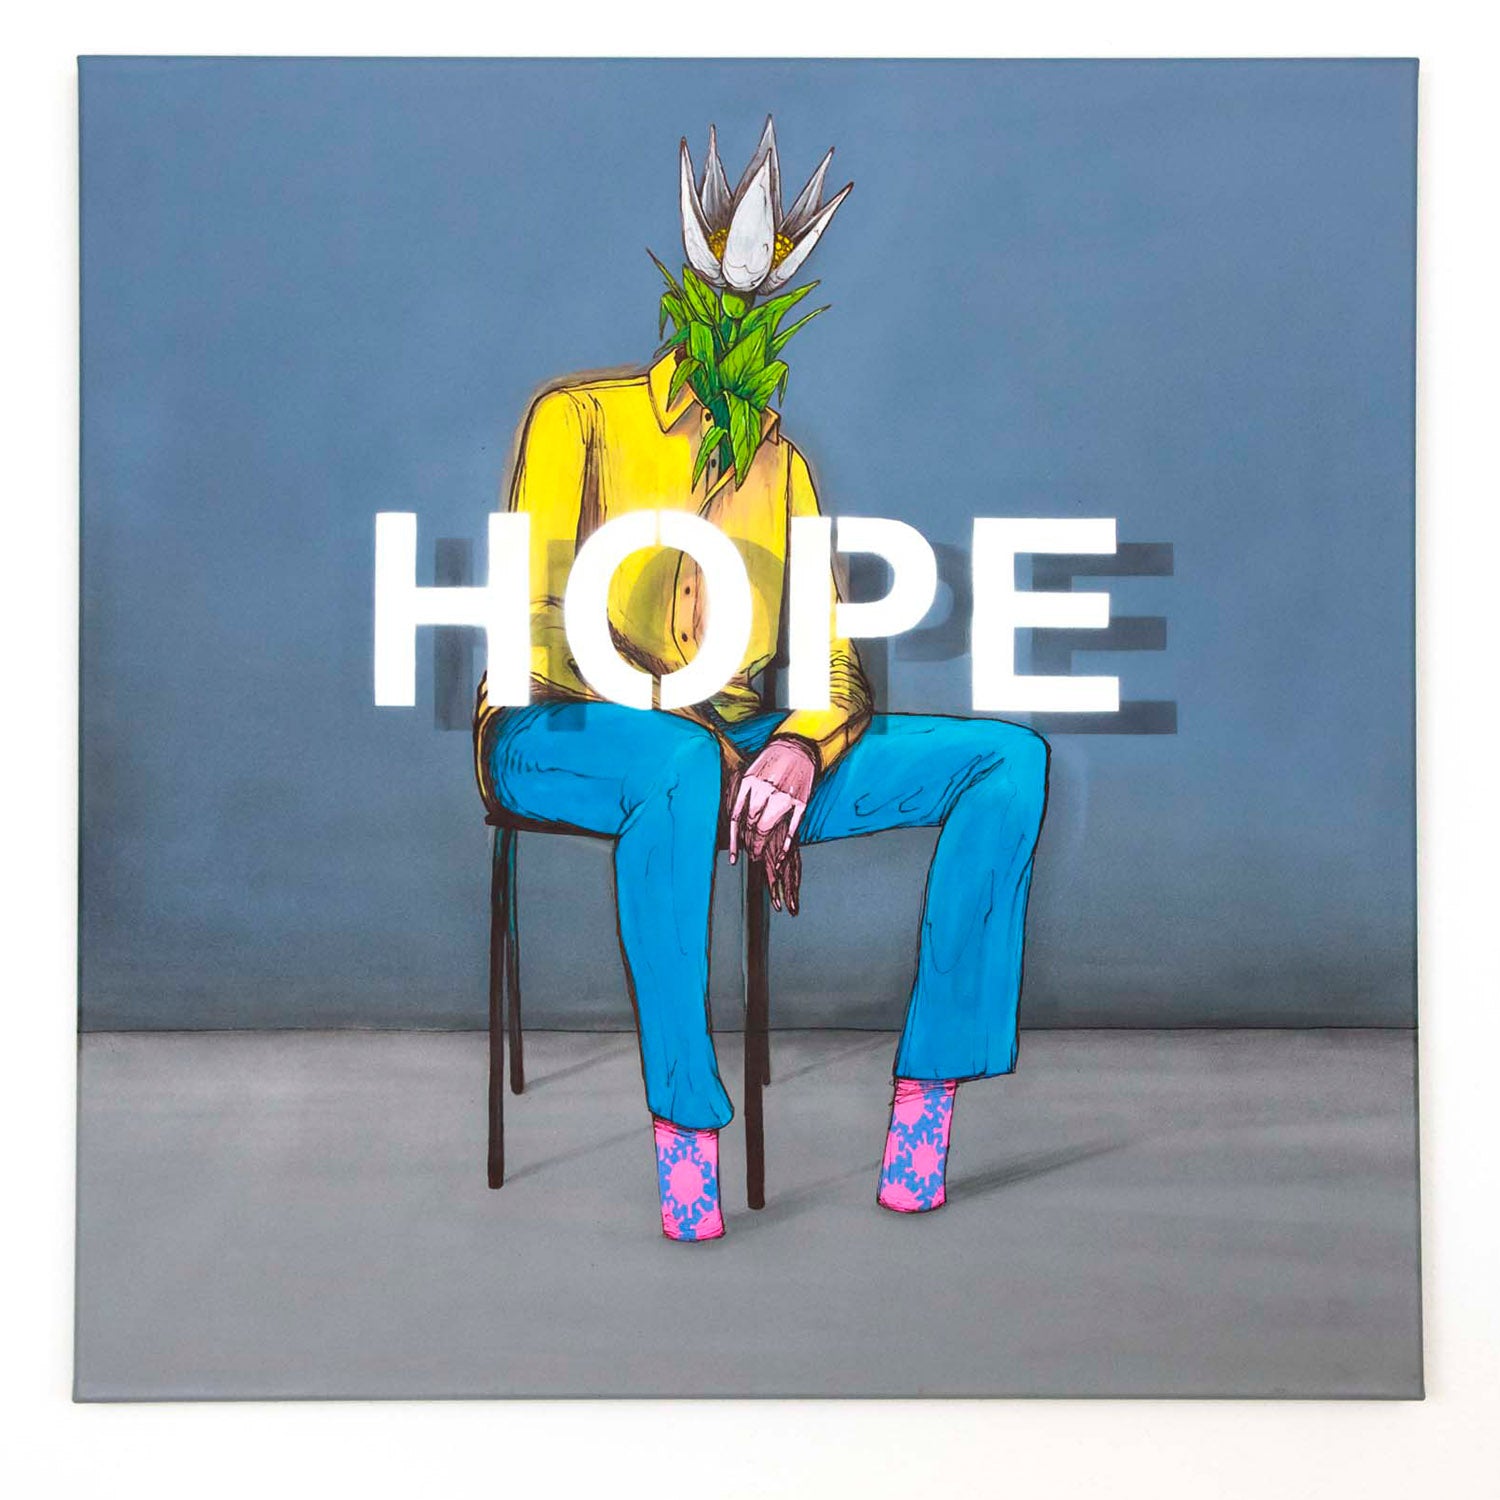 Buy Original Art on canvas by Goncalo MAR Street Artist "HOPE" Because Art Matters